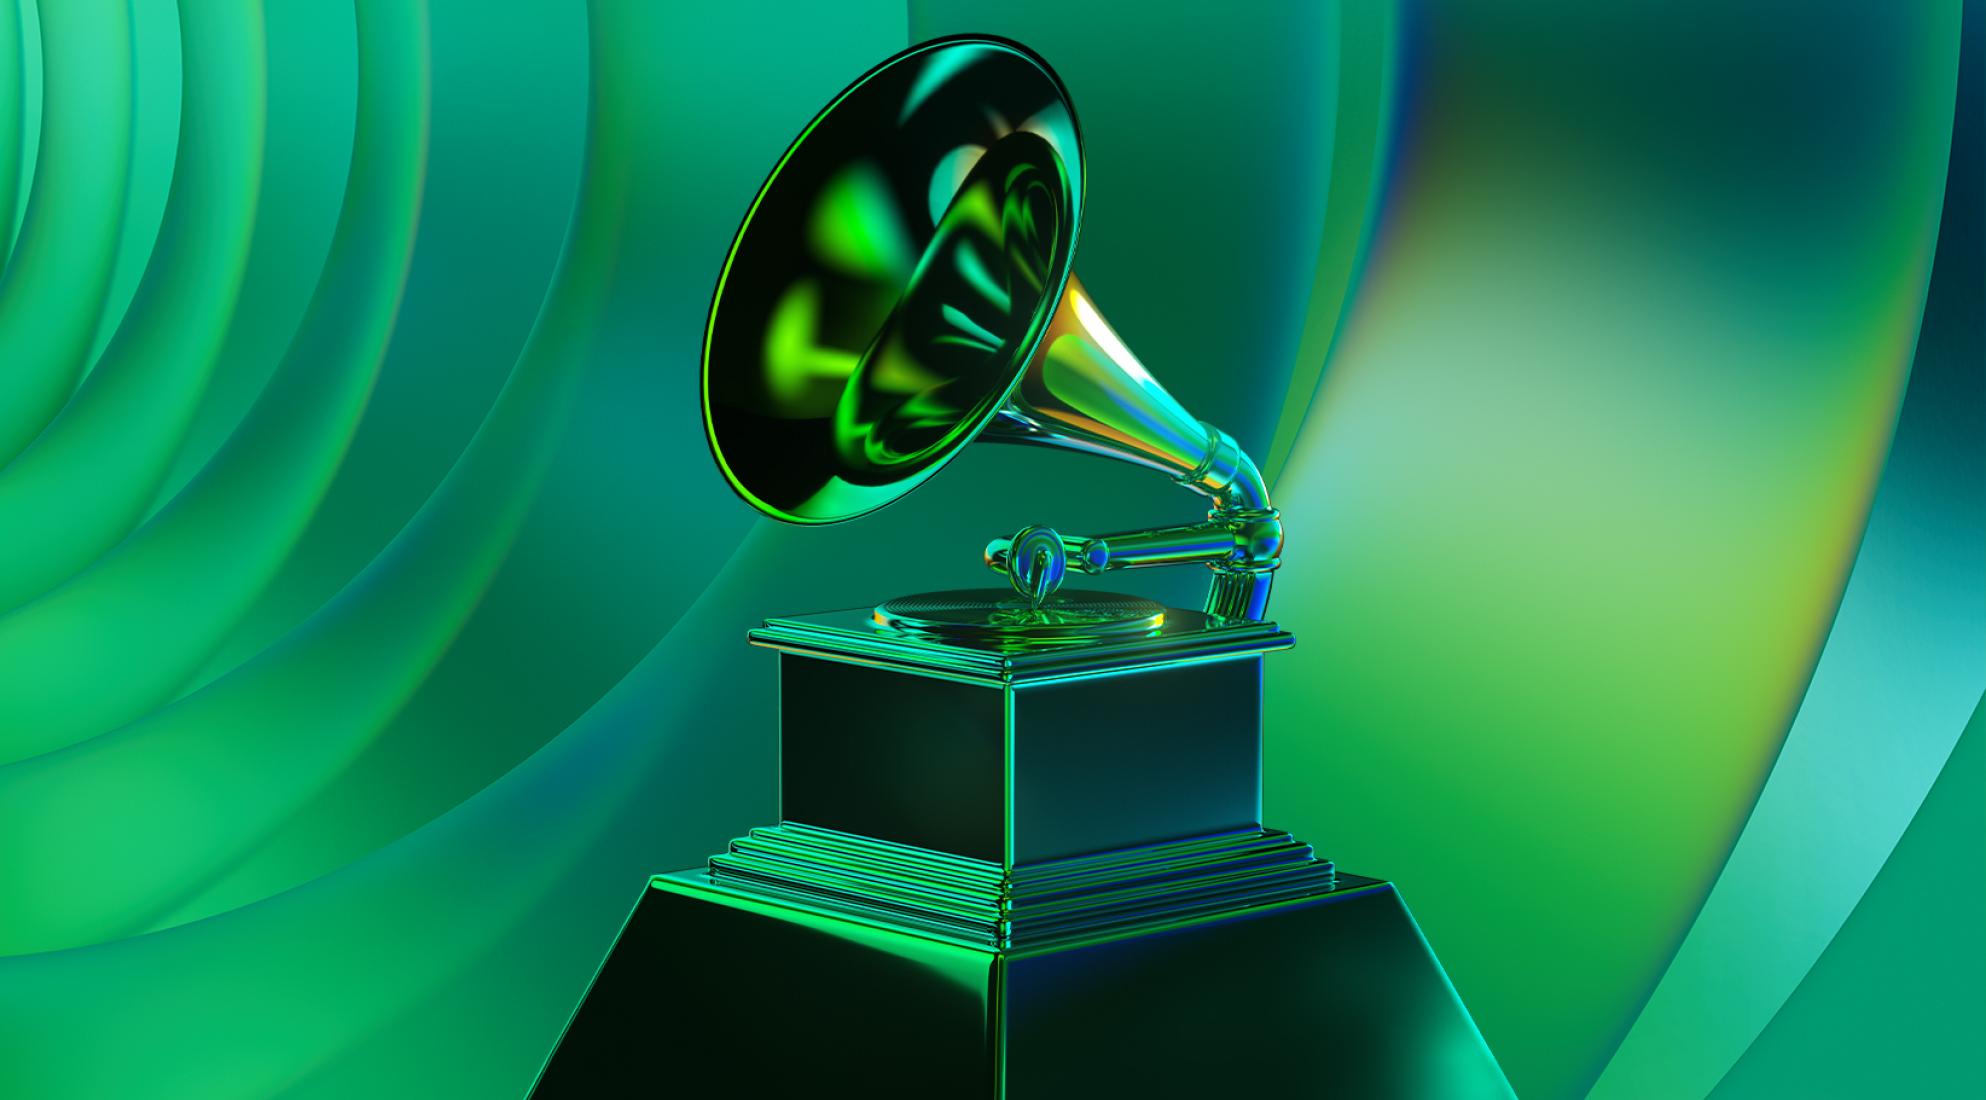 Latin Grammys 2022: Full Winners List